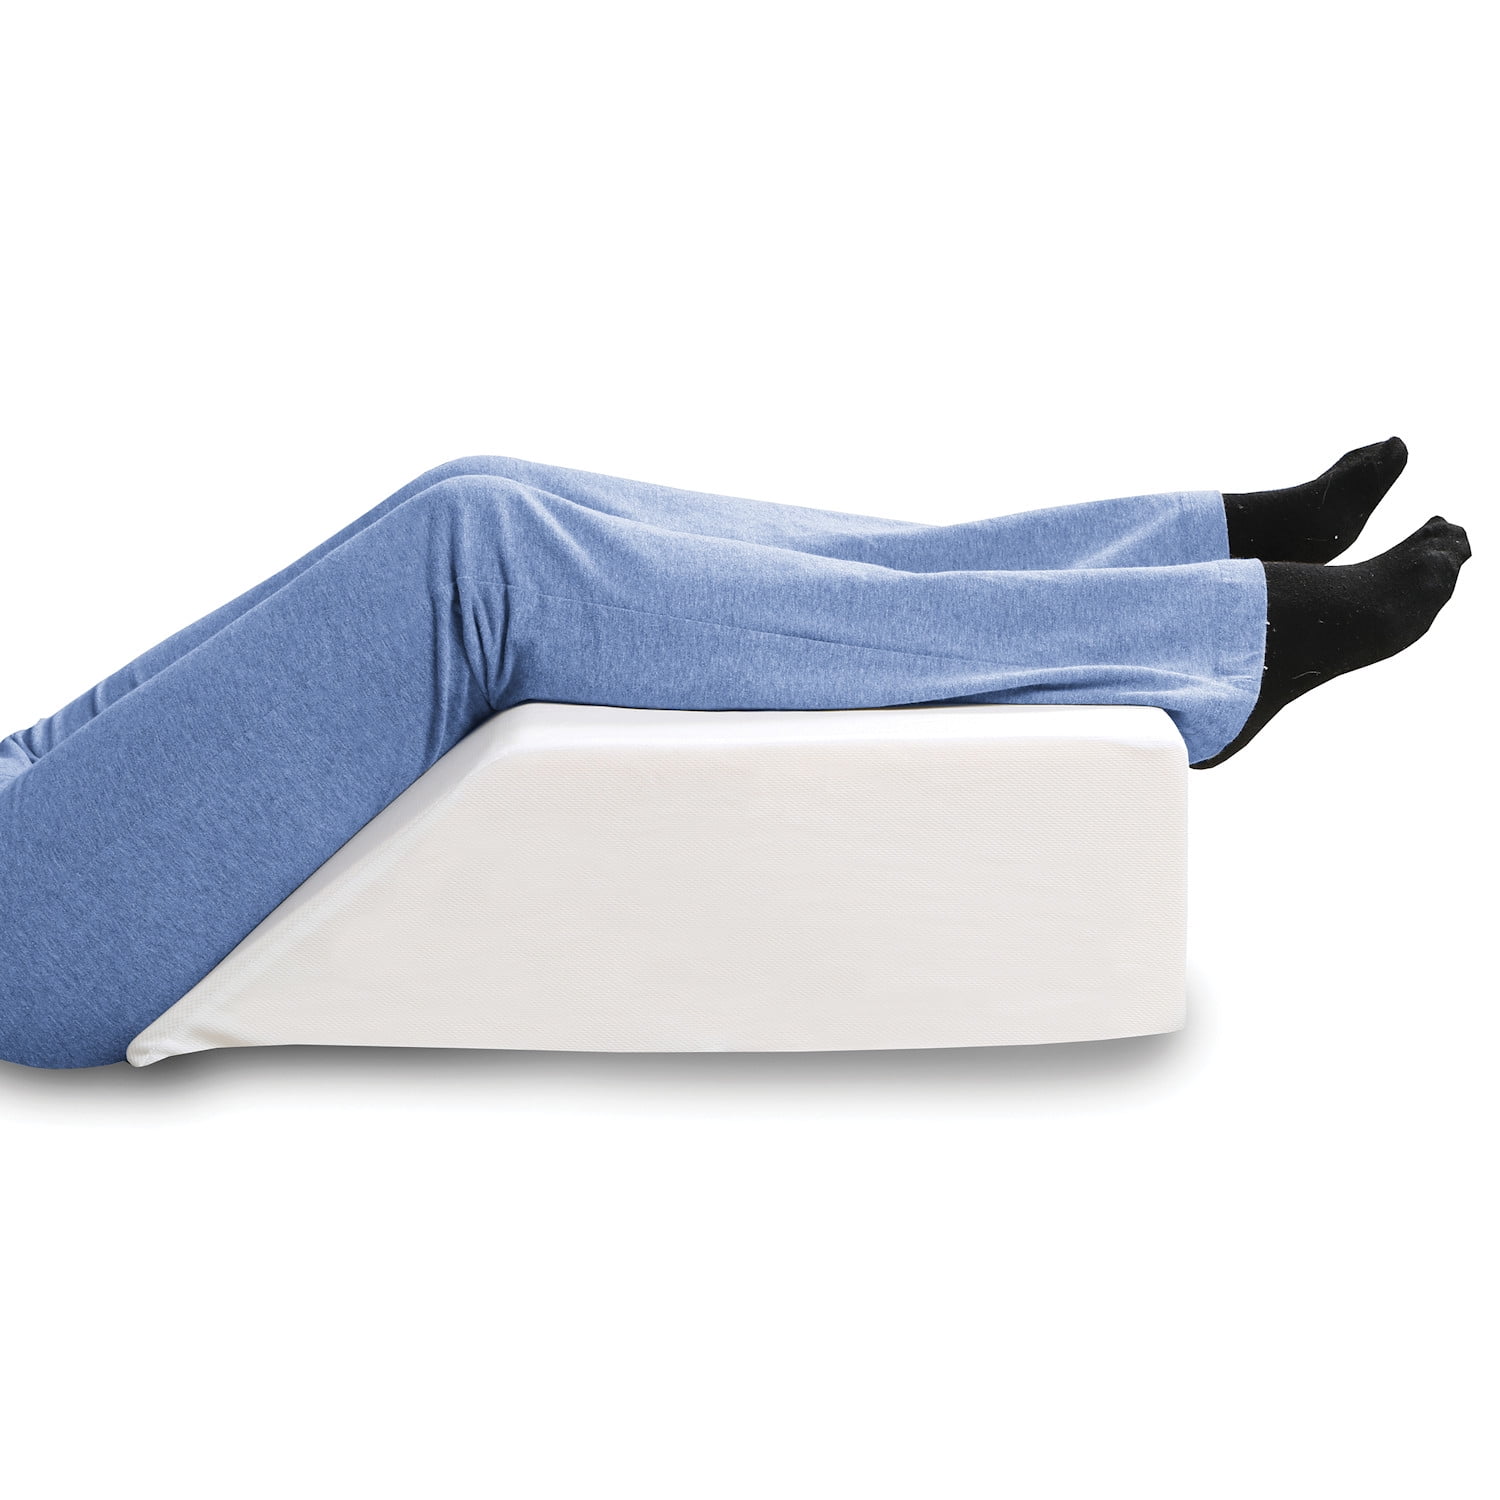 Orthopedic Wellness Coccyx ZIRAKI Wedge Foam Seat Cushion Pillow Support 